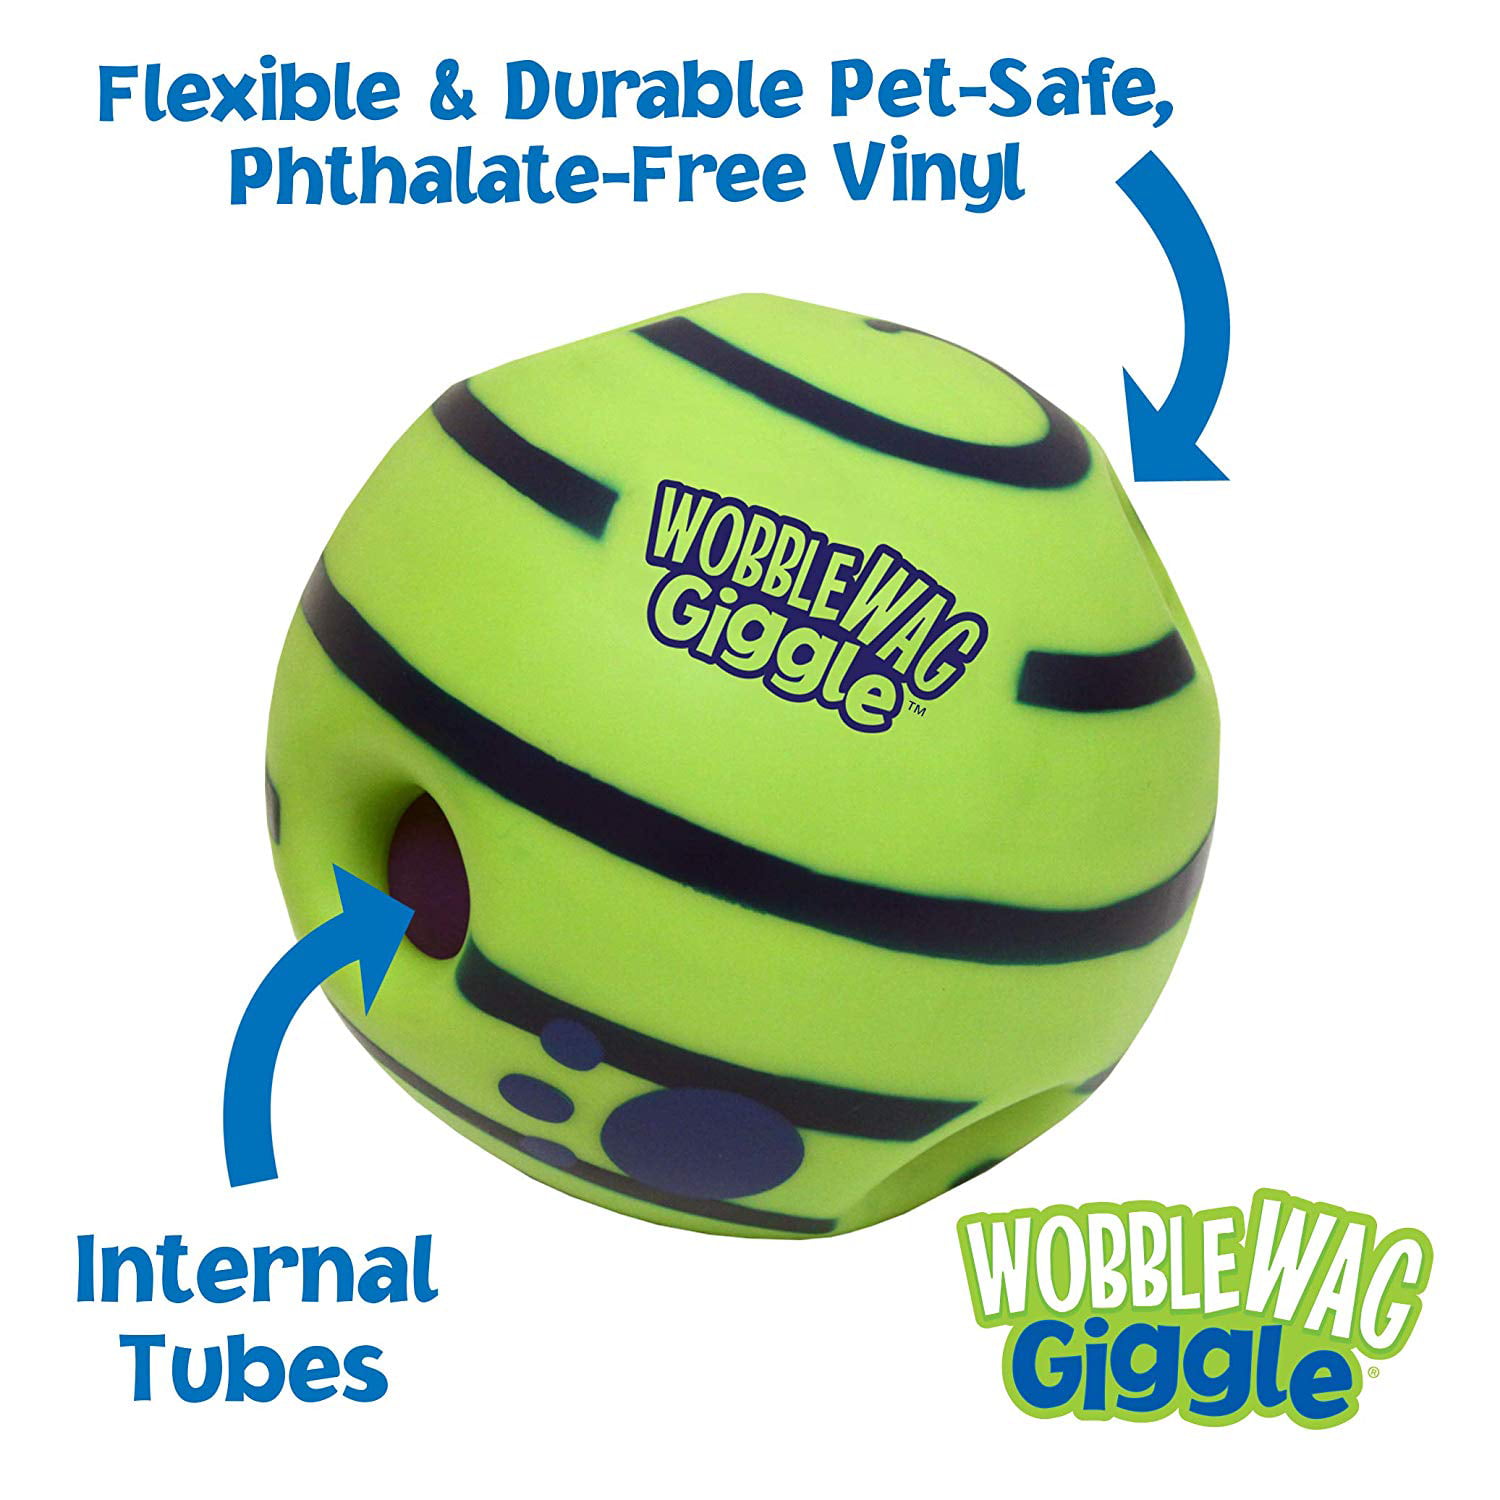 wobble waggle giggle ball